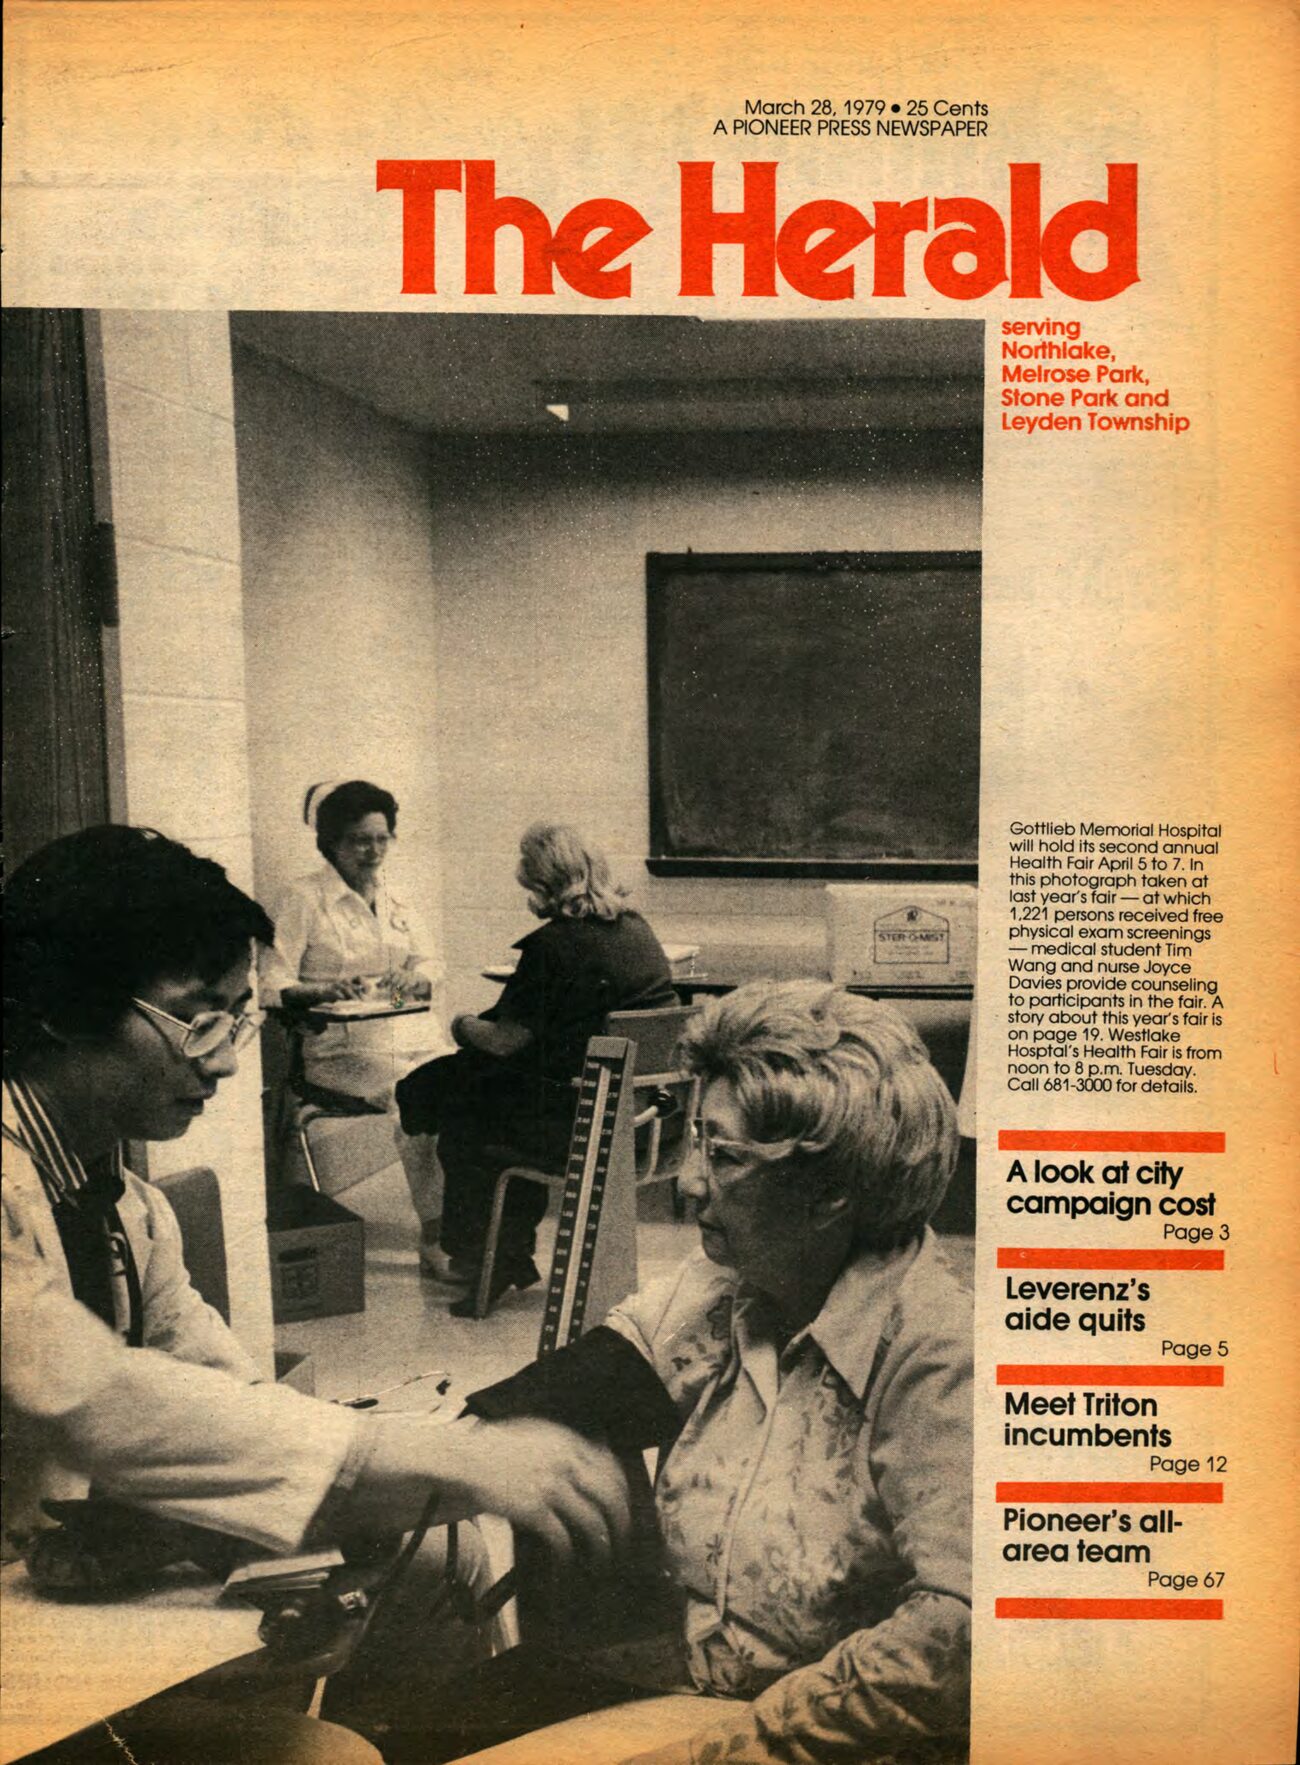 The Herald – 19790328